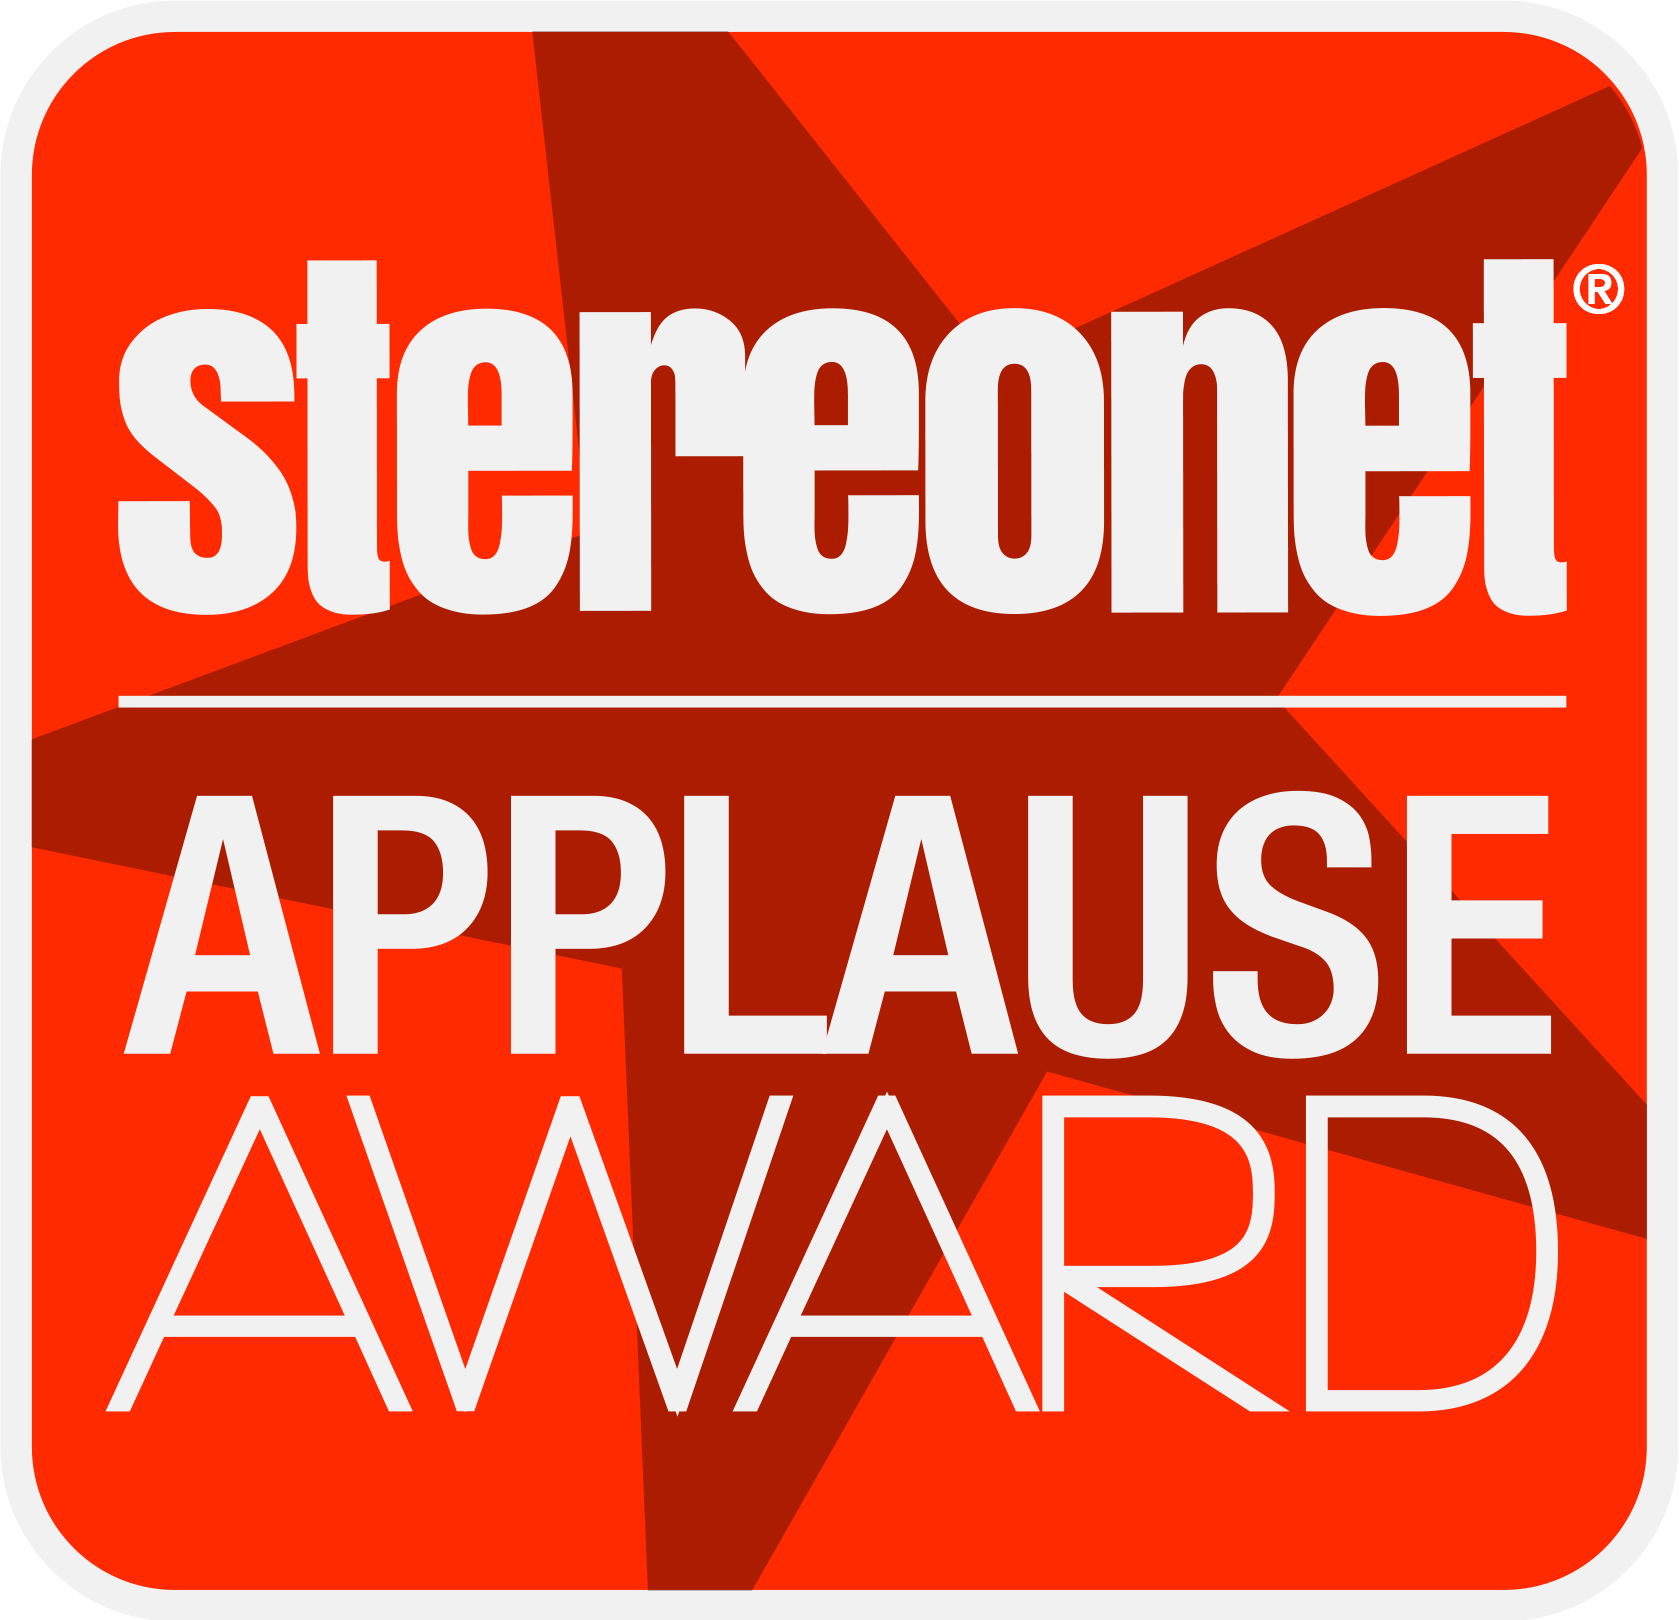 Stereonet Applause Award for teh Acoustic Energy Corinium Loudspeaker